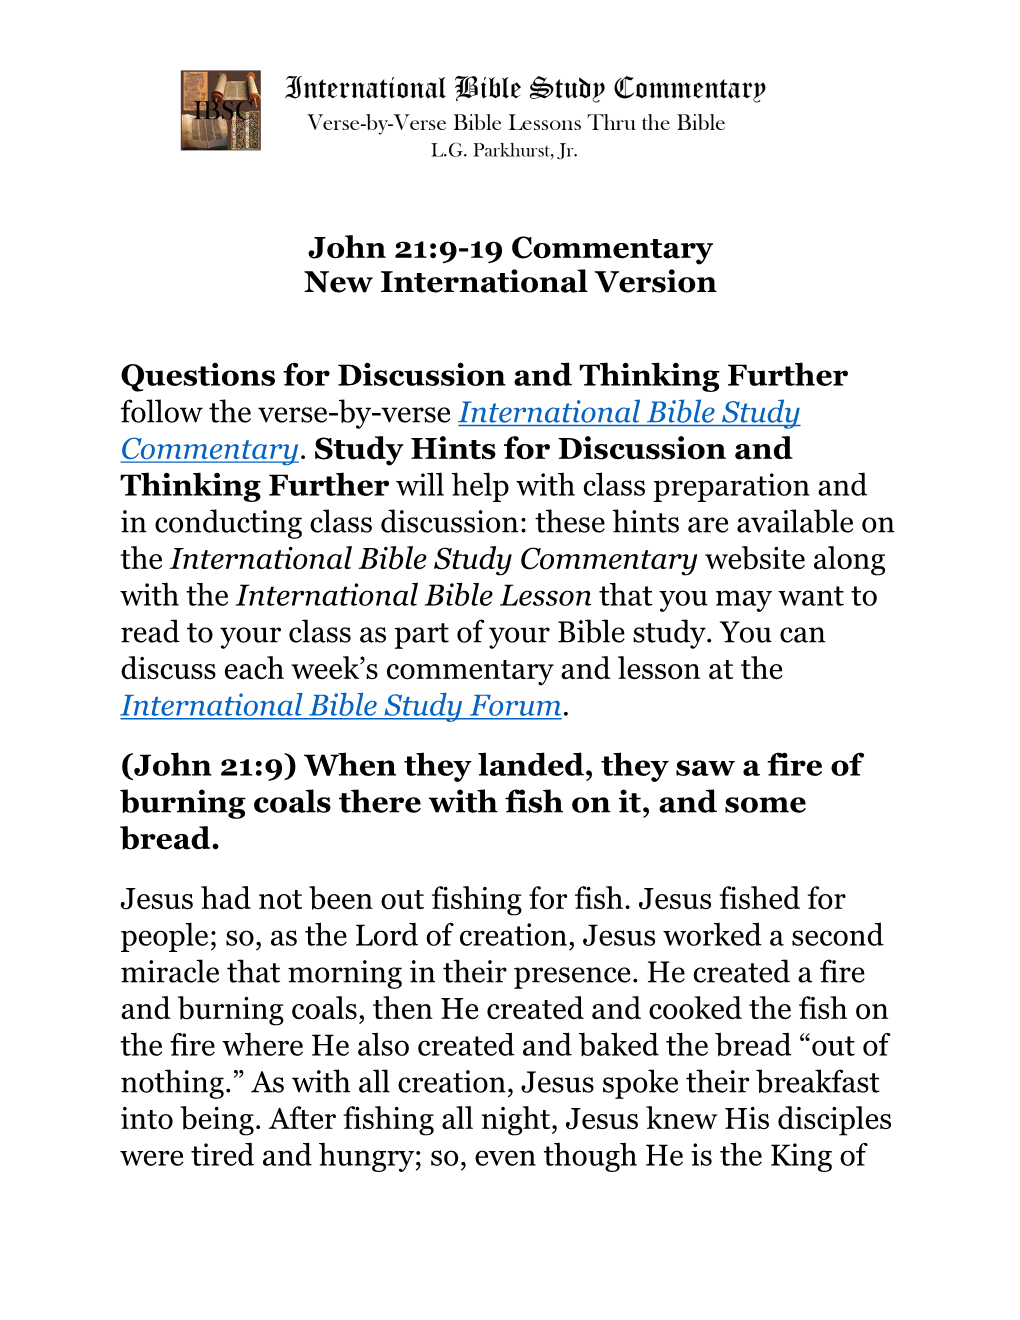 International Bible Study Commentary by L.G. Parkhurst